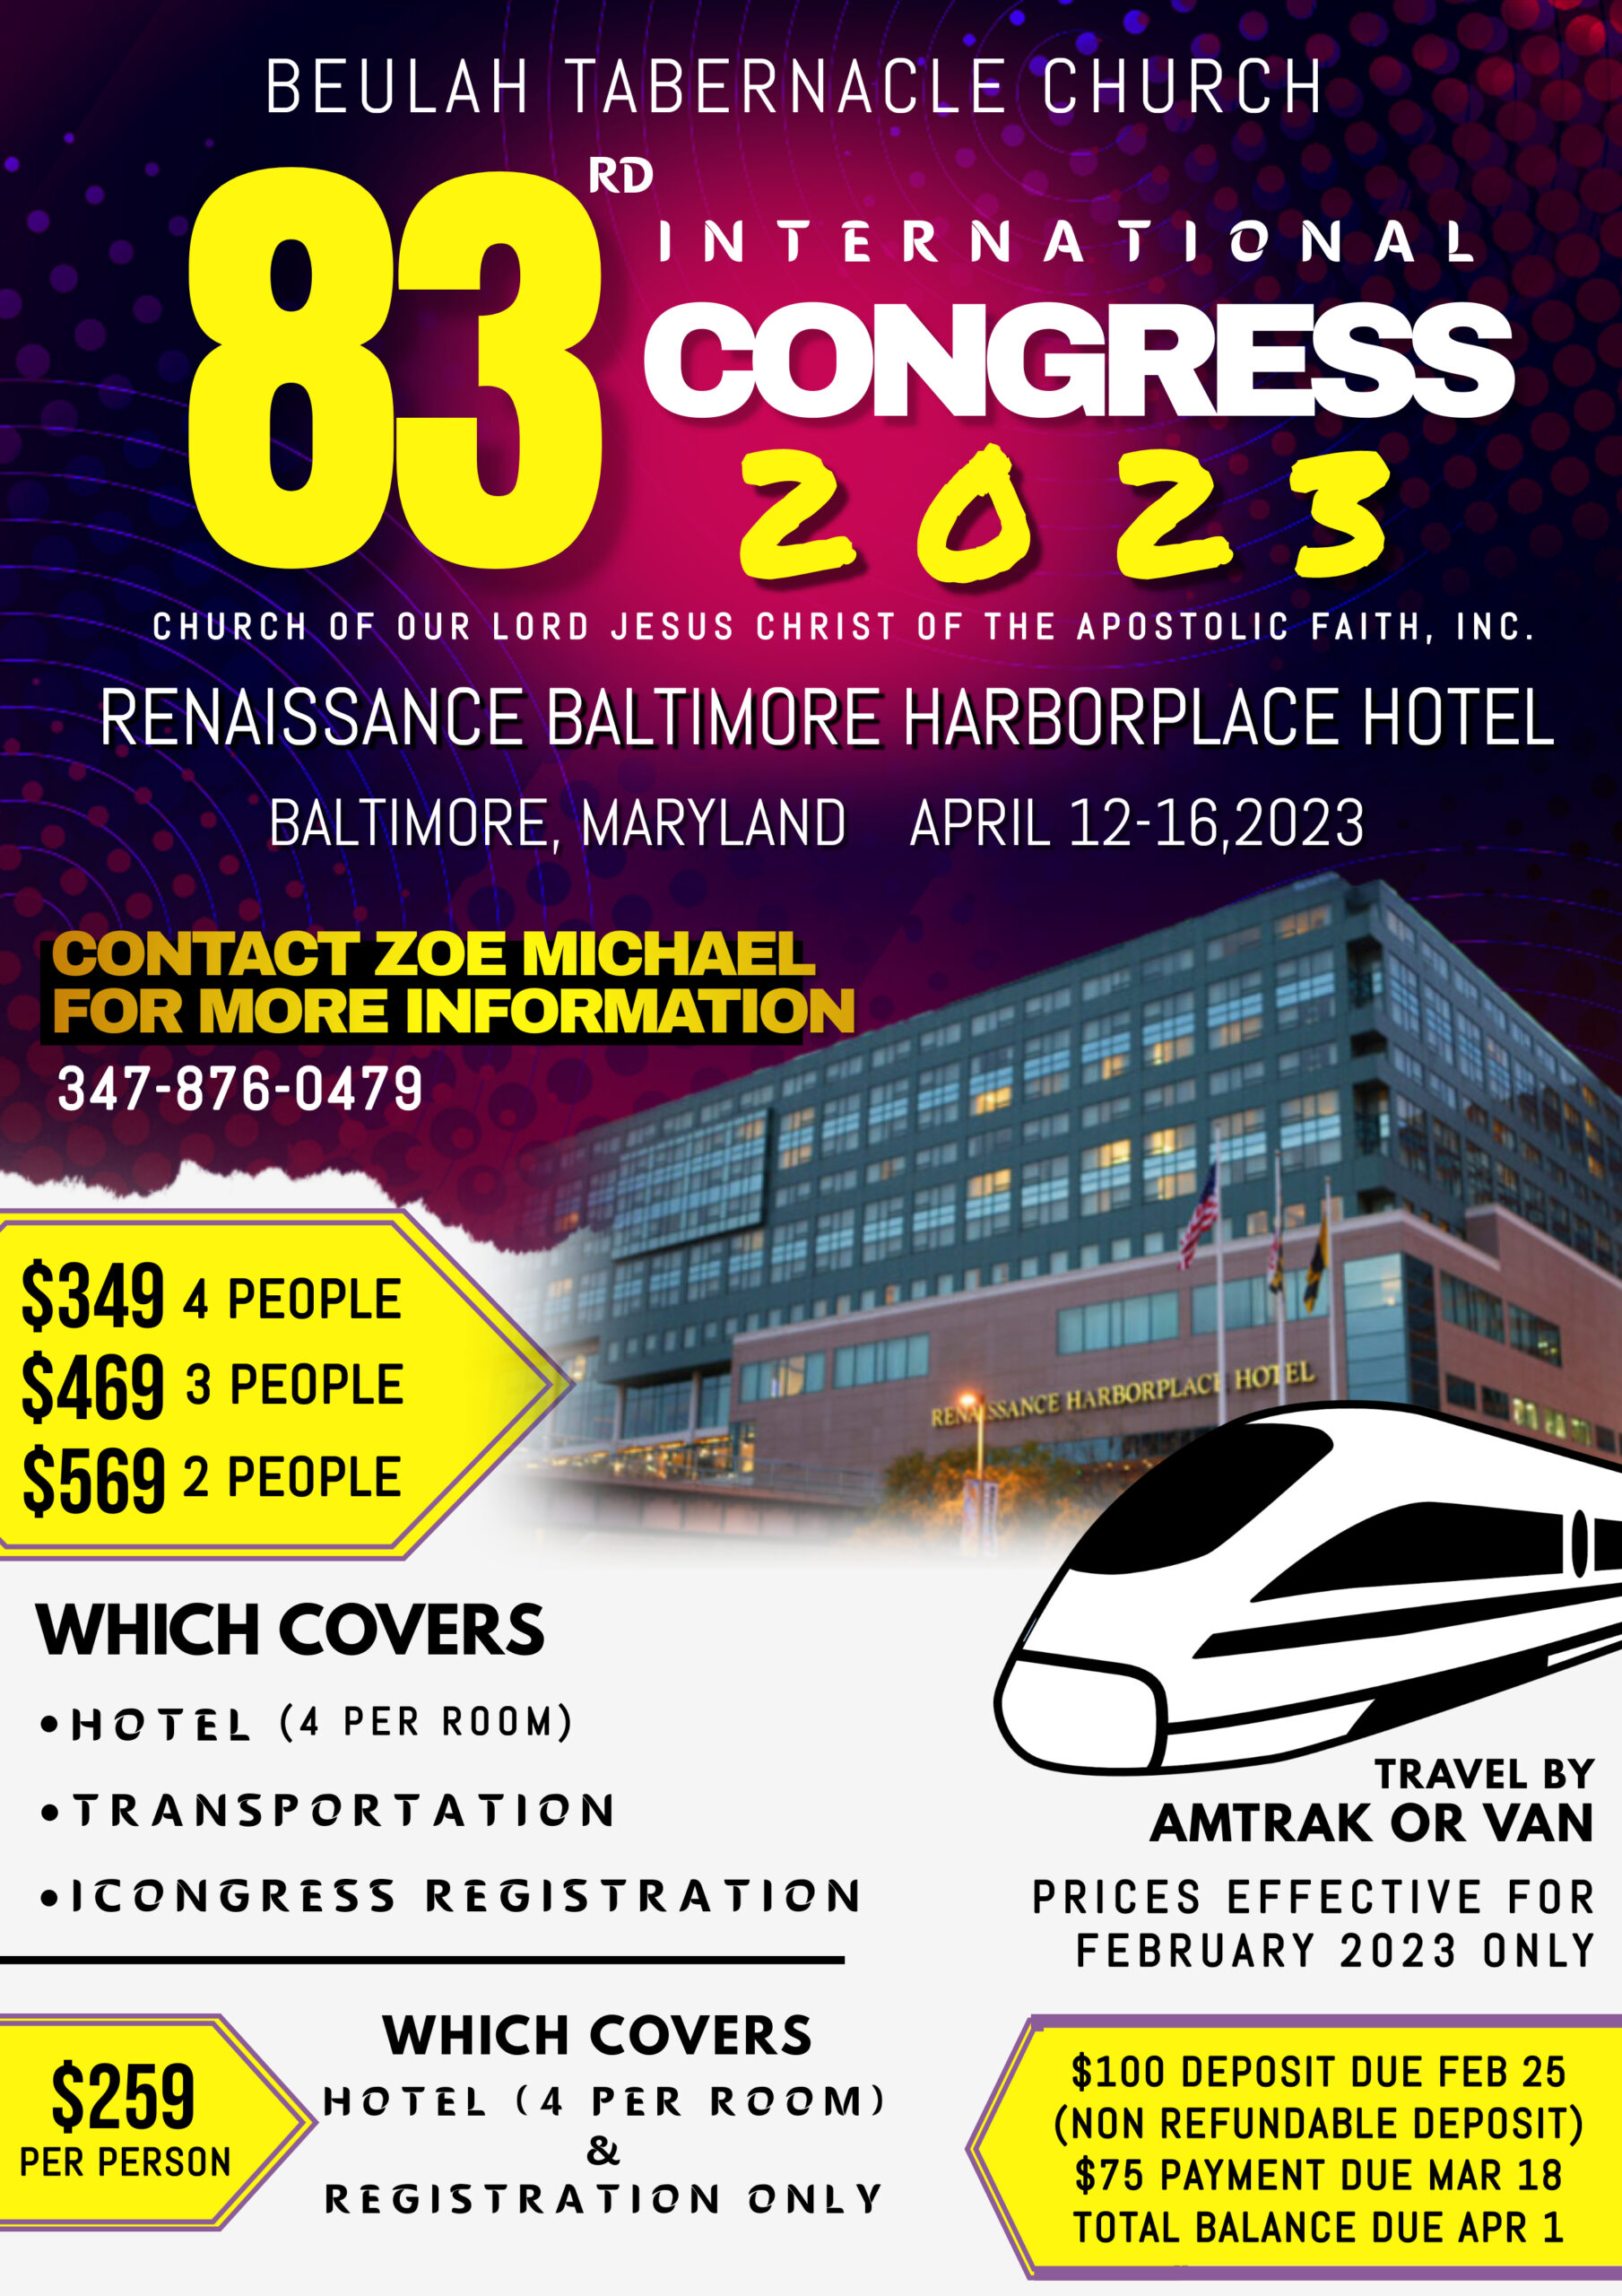 COOLJC : iCongress 2023 @ Renaissance Baltimore Harborplace Hotel